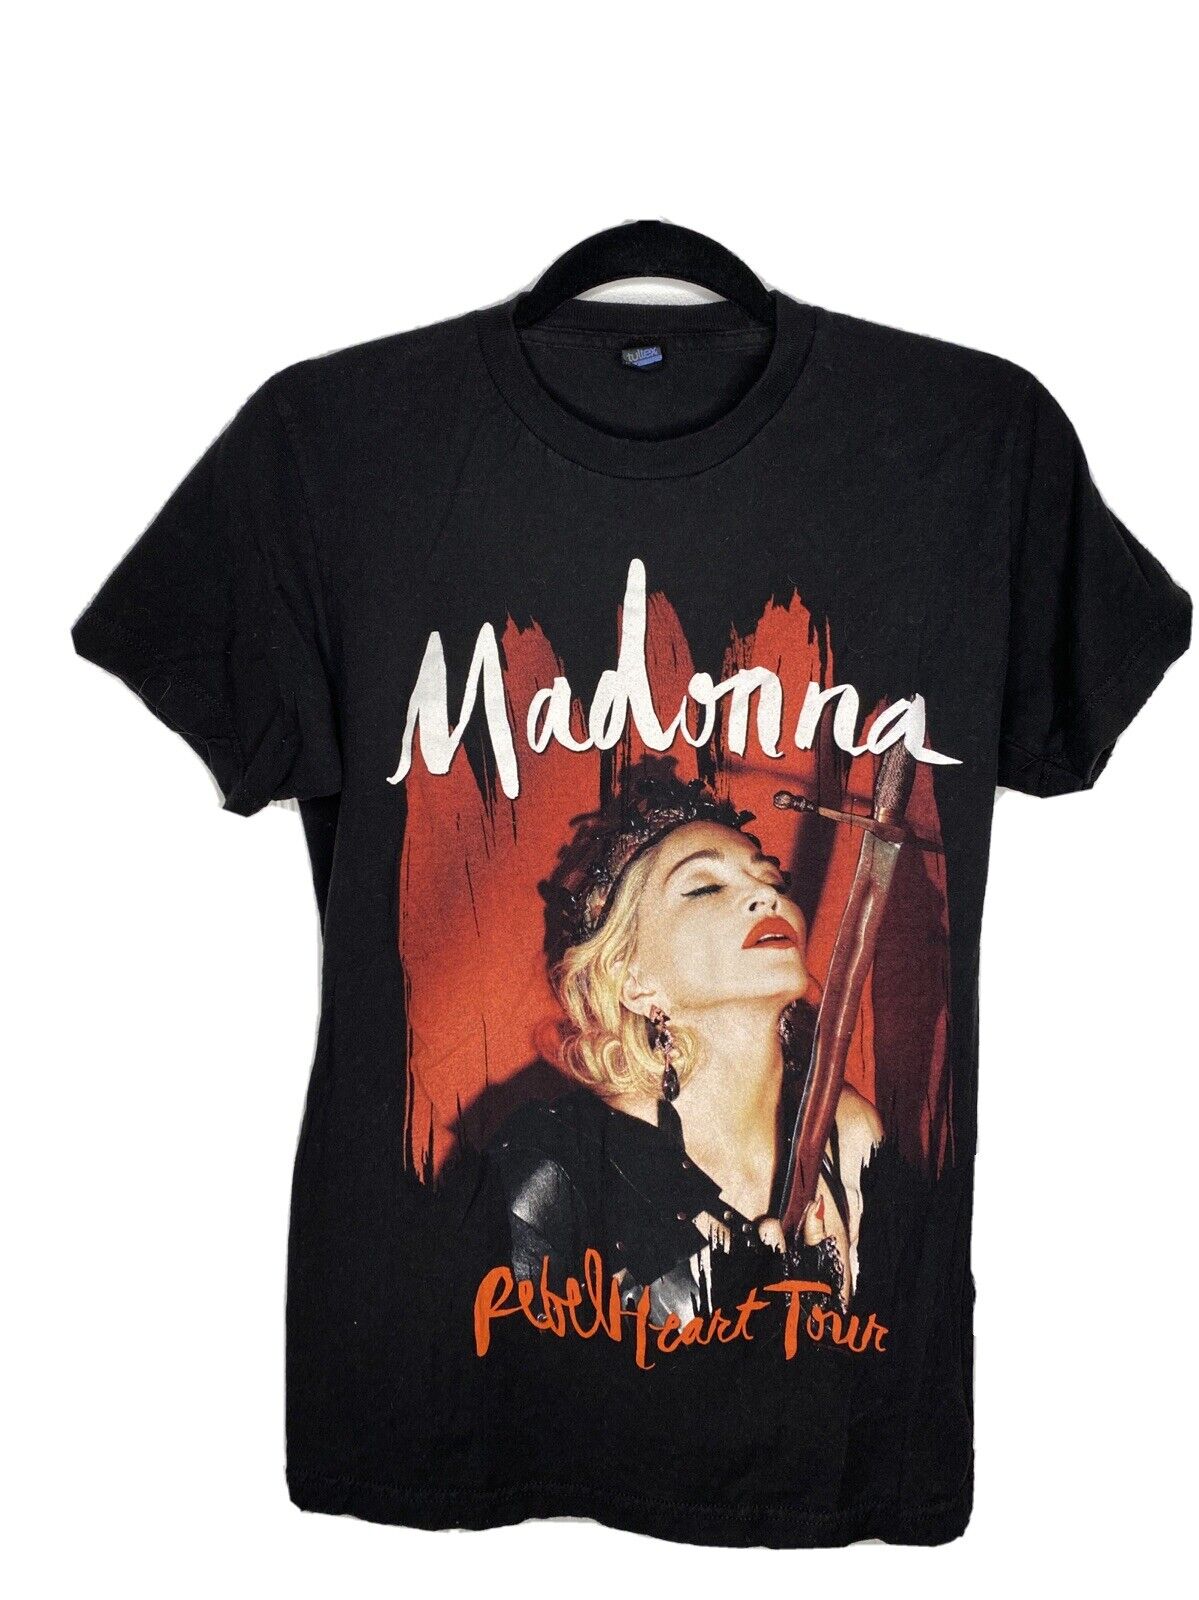 Madonna Rebel Heart Tour T-shirt Size Small Never Worn Rare